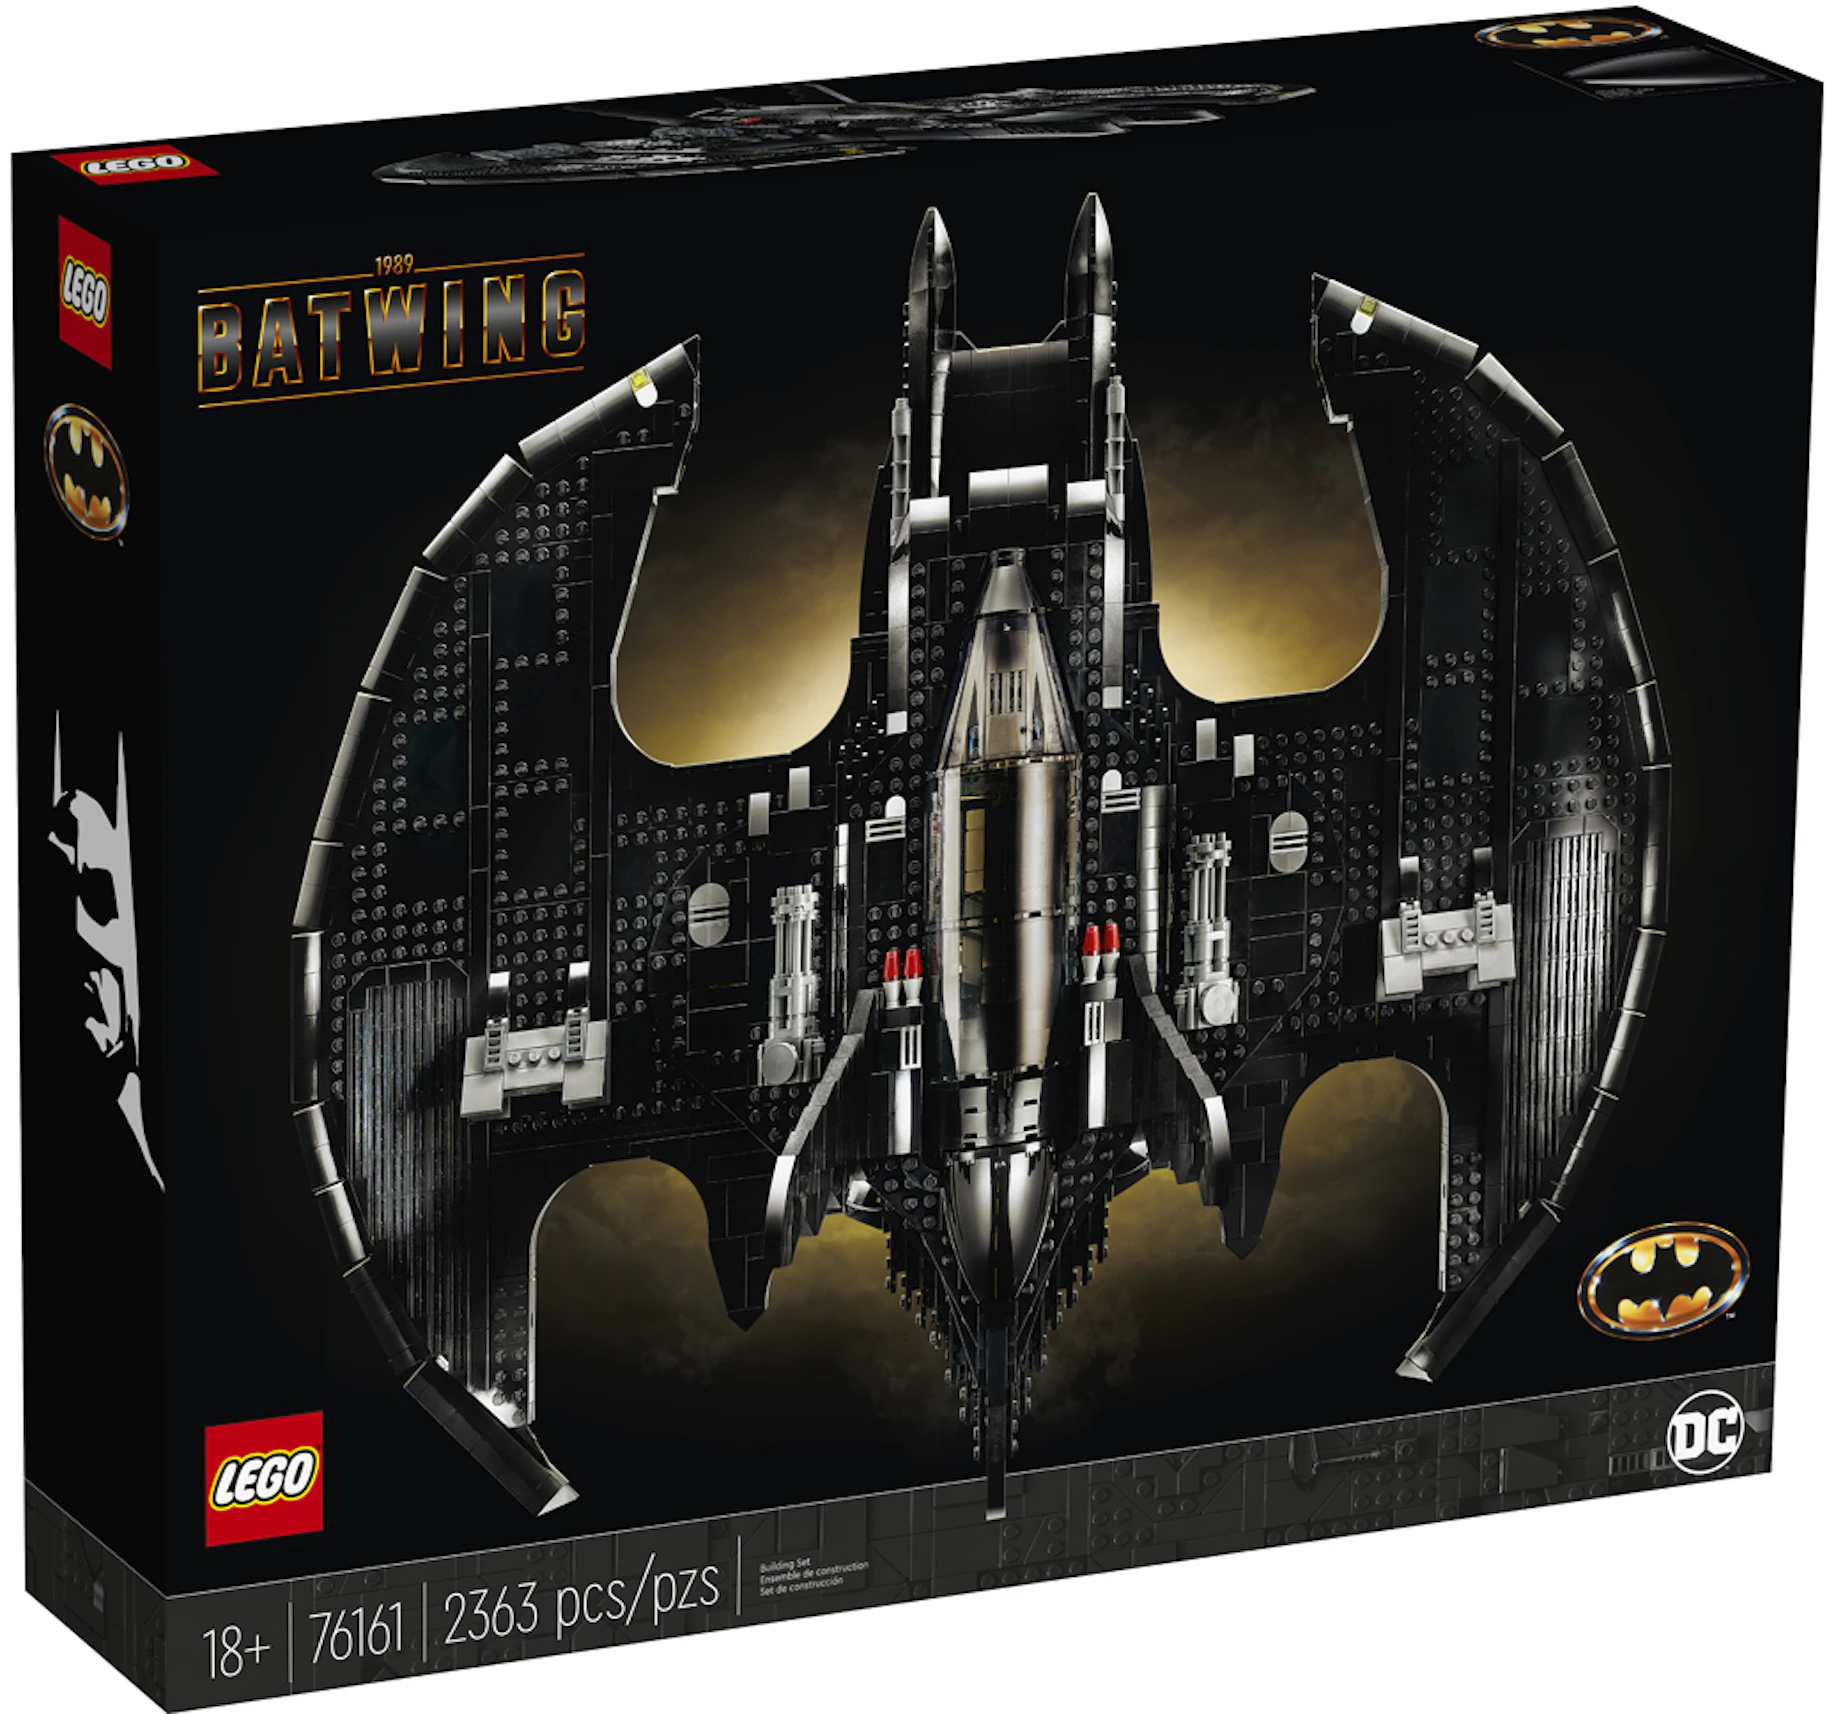 LEGO DC Batman 1989 Batwing Set 76161 - US